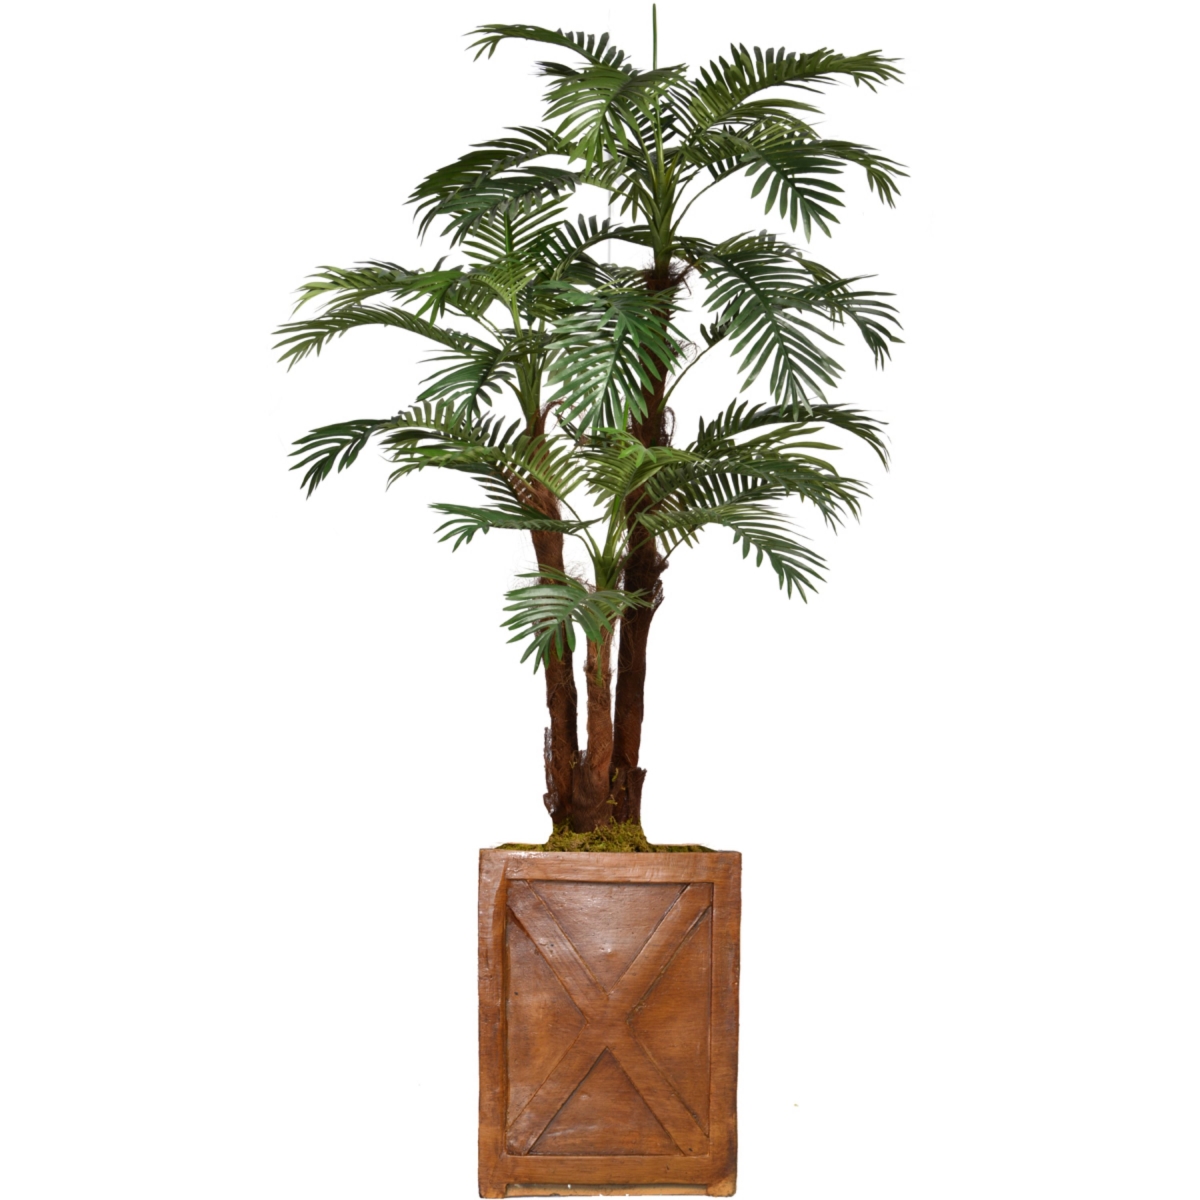 Vhx135207 75 In. Tall Palm Tree With Burlap Kit & Fiberstone Planter